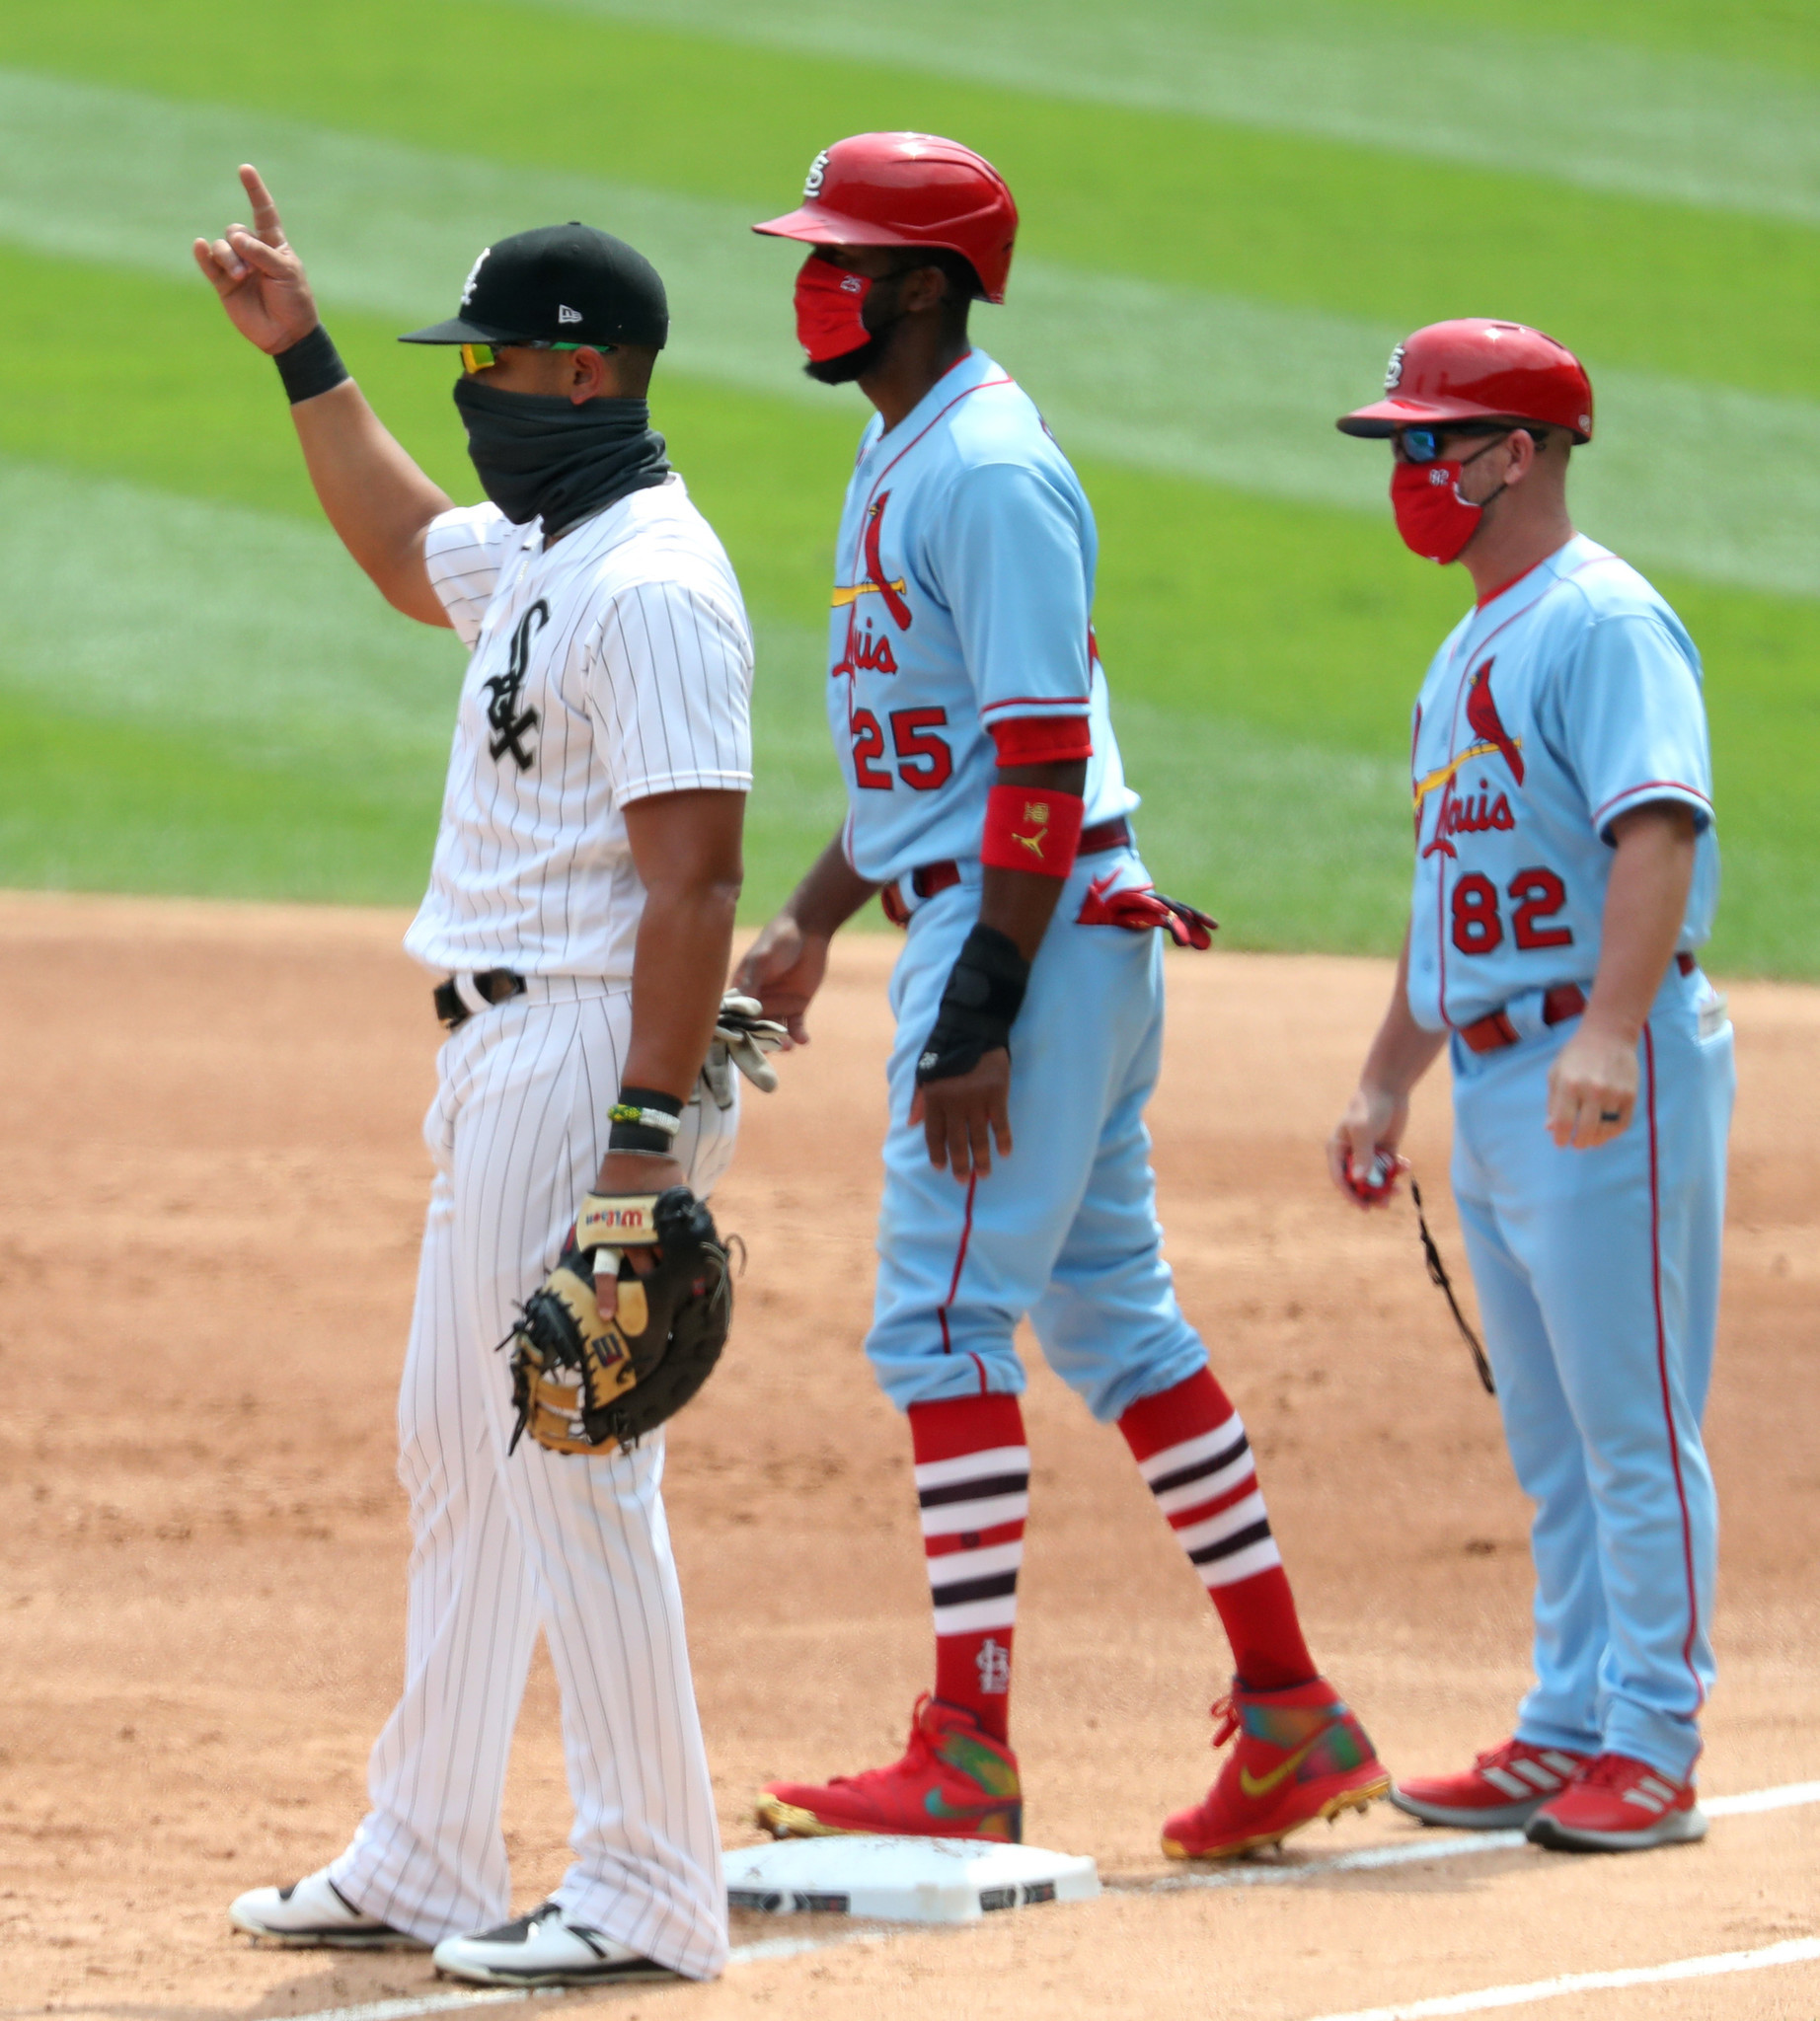 St. Louis Cardinals Shortstop Discusses COVID19, MLB Season